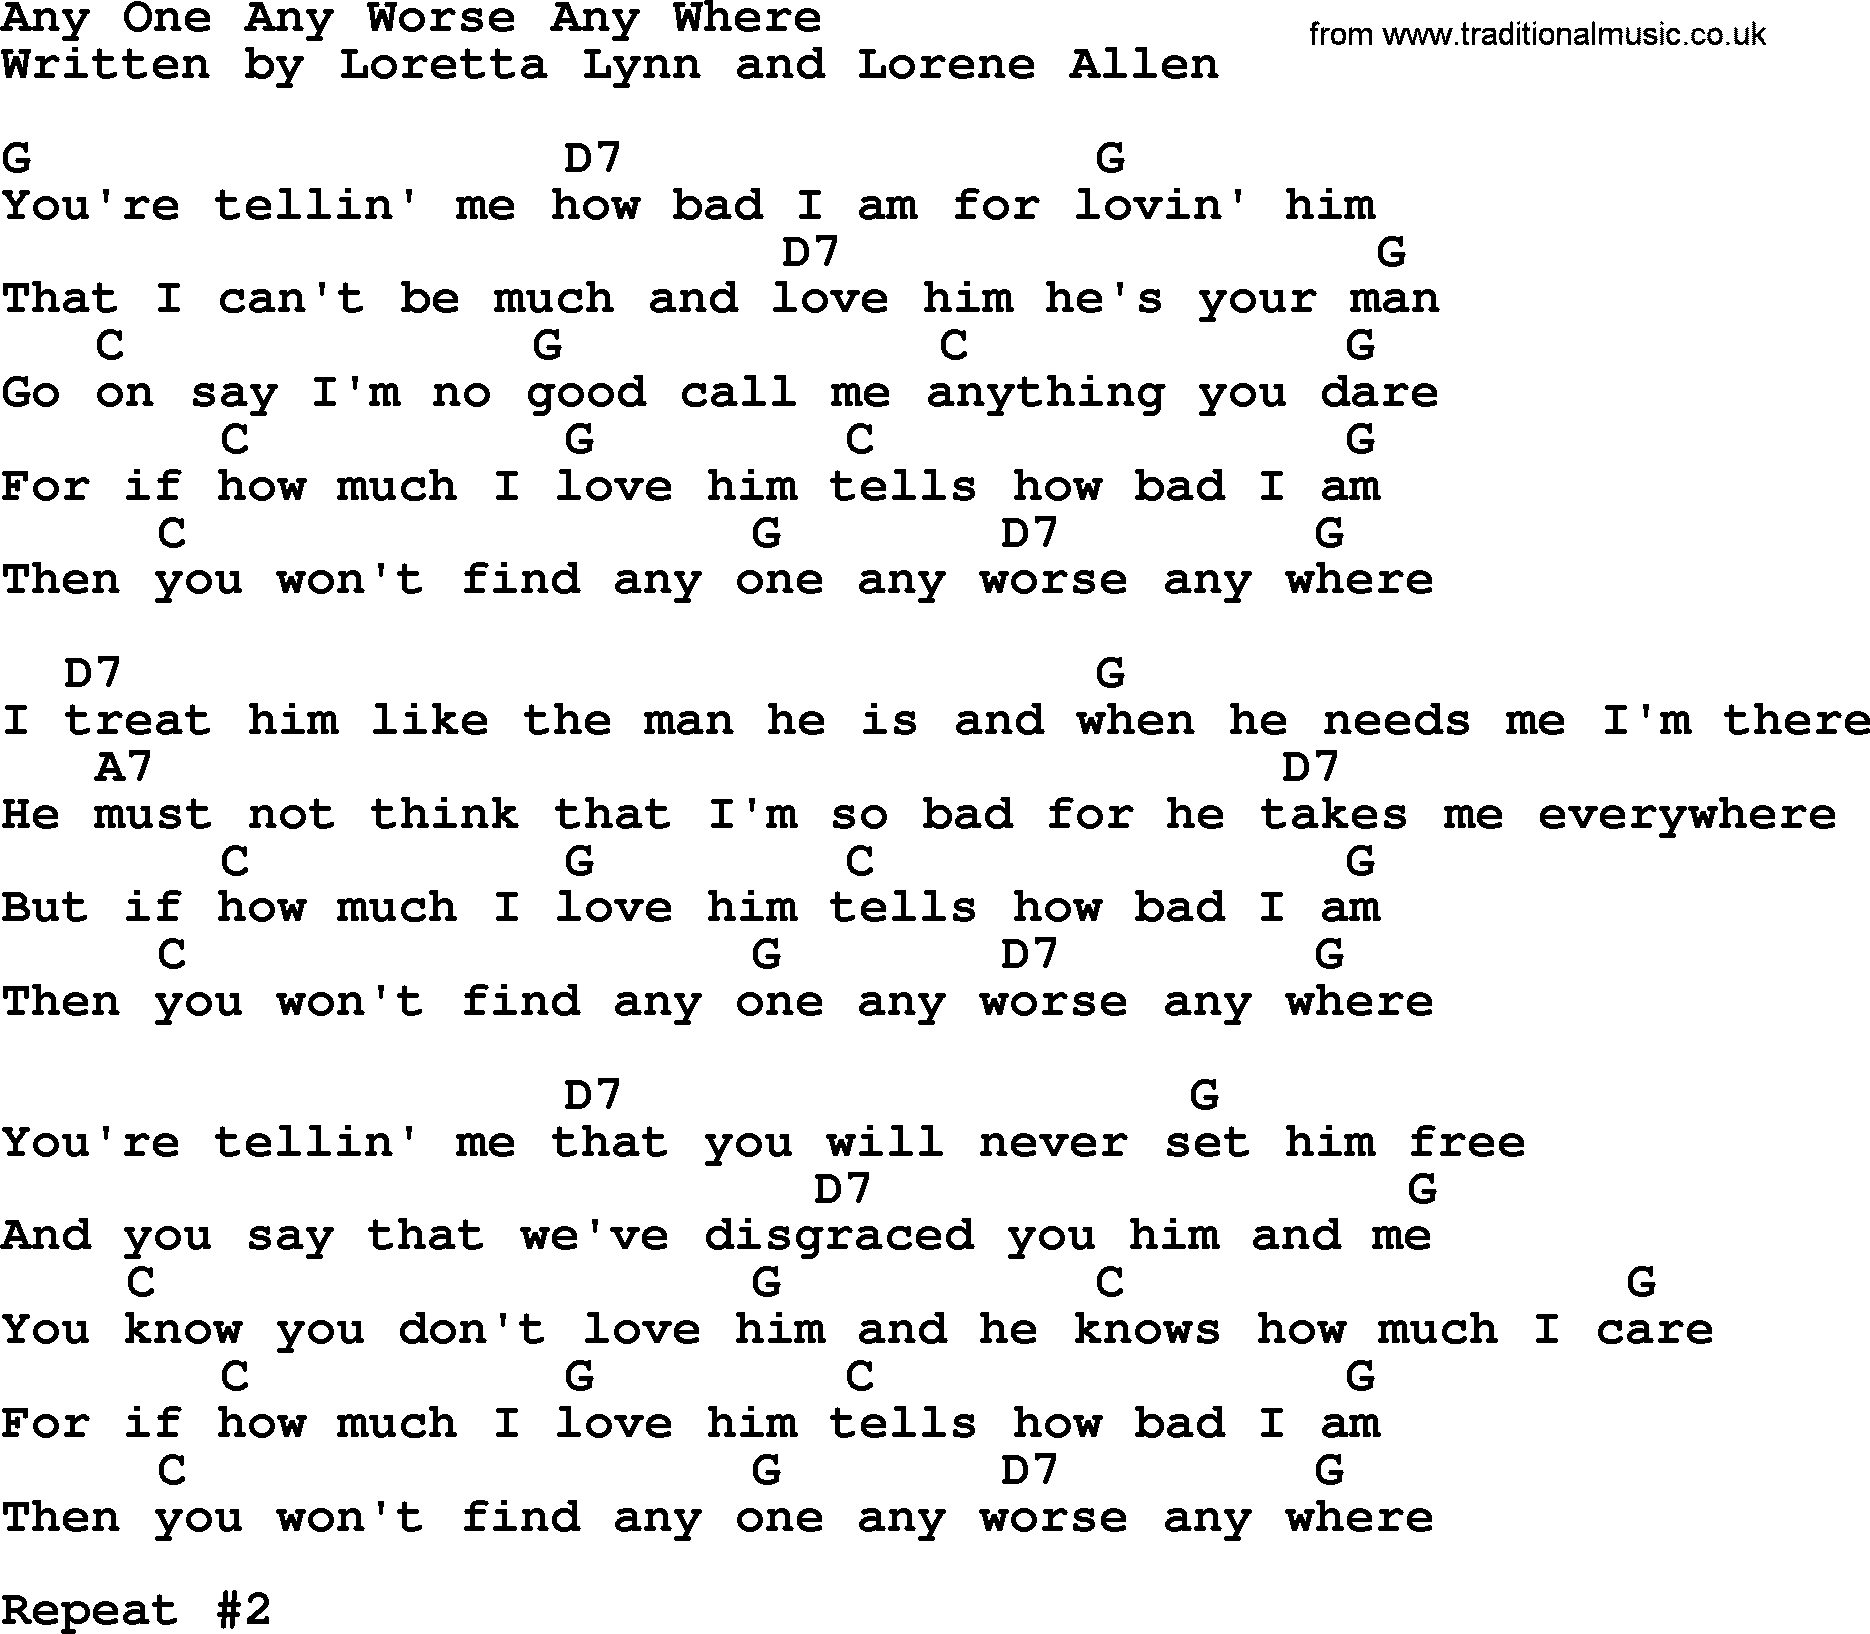 Loretta Lynn song: Any One Any Worse Any Where lyrics and chords